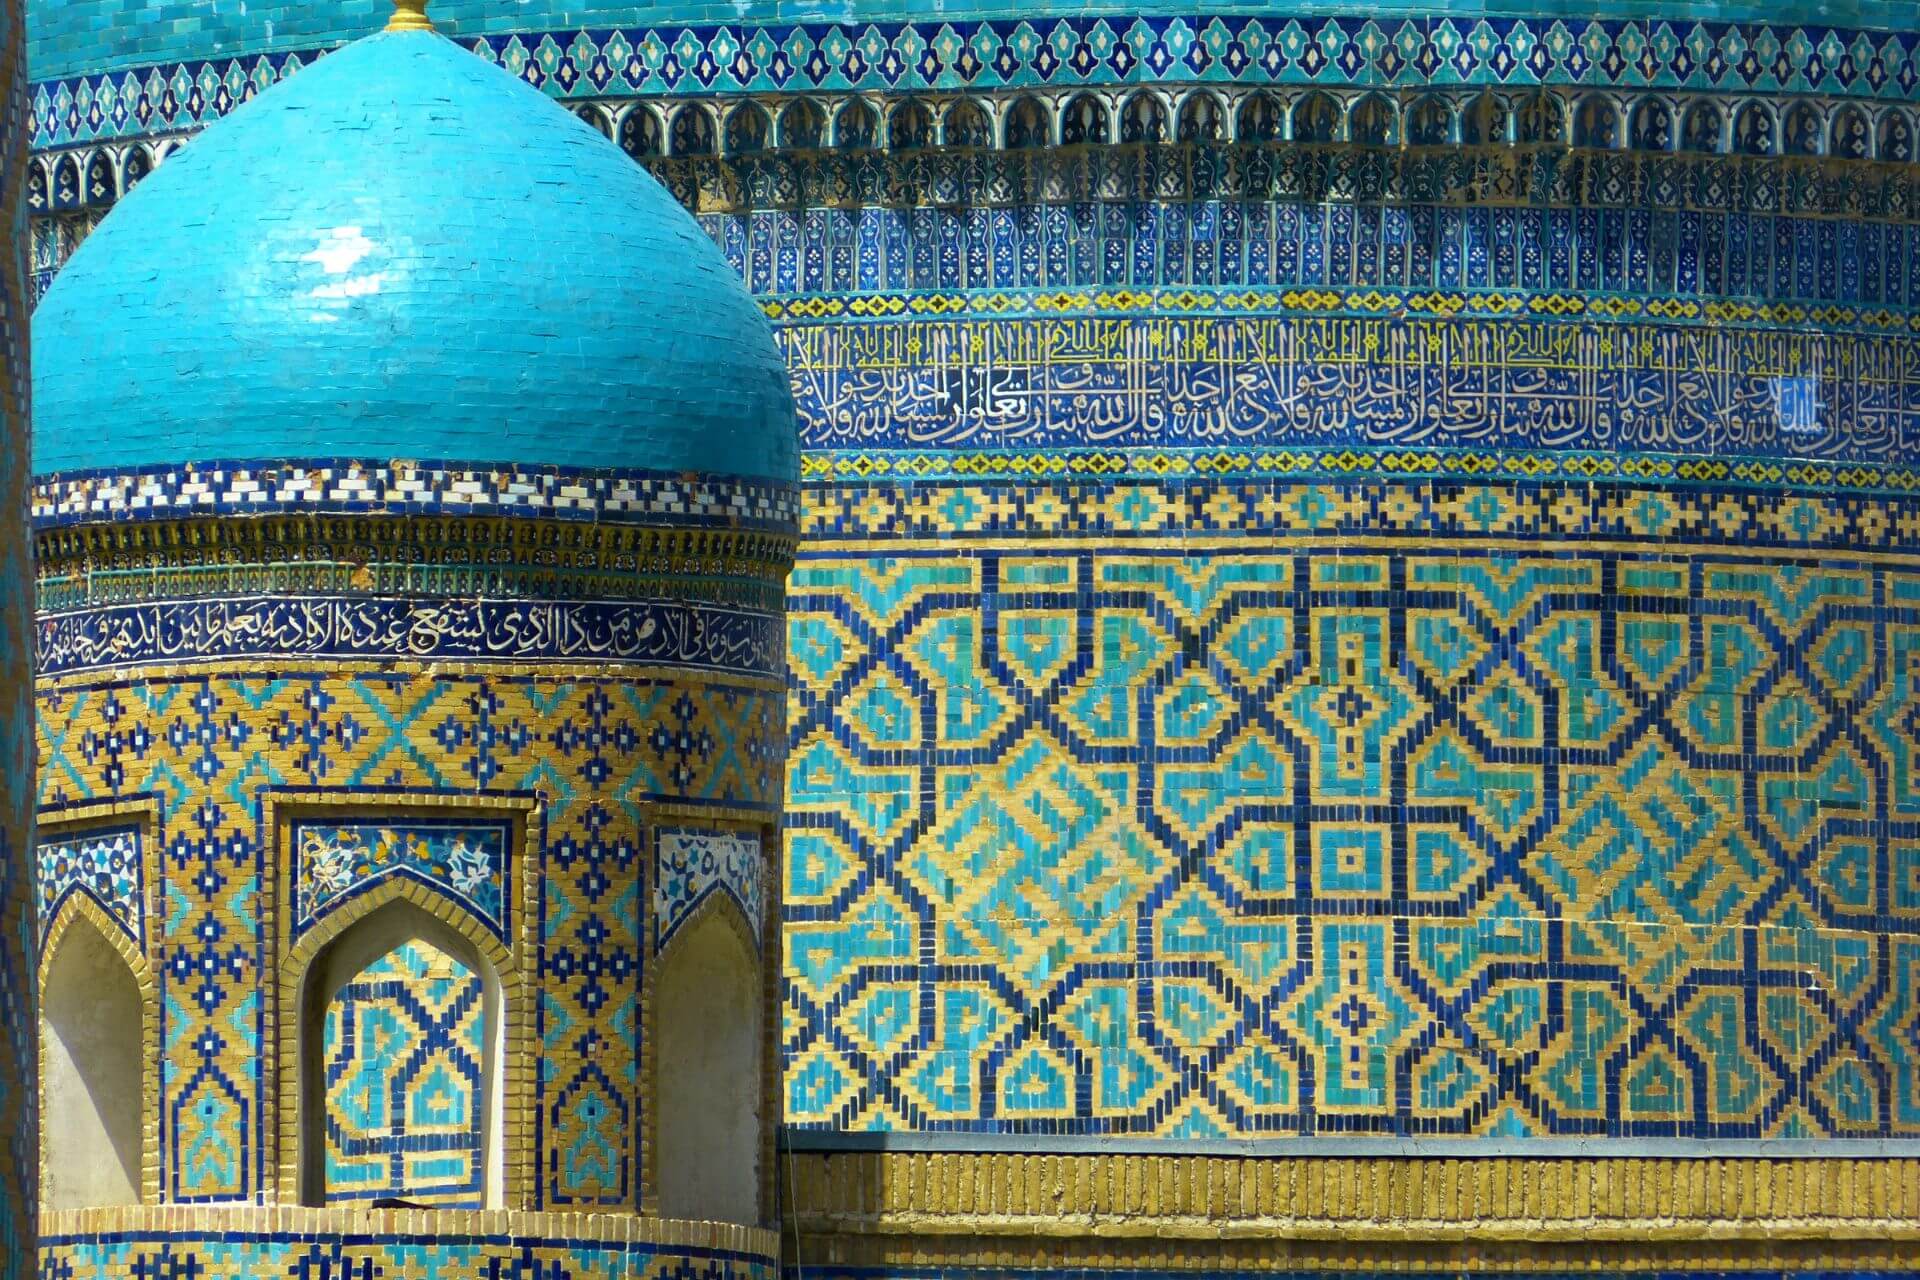 Captivating Classic Tour around Uzbekistan